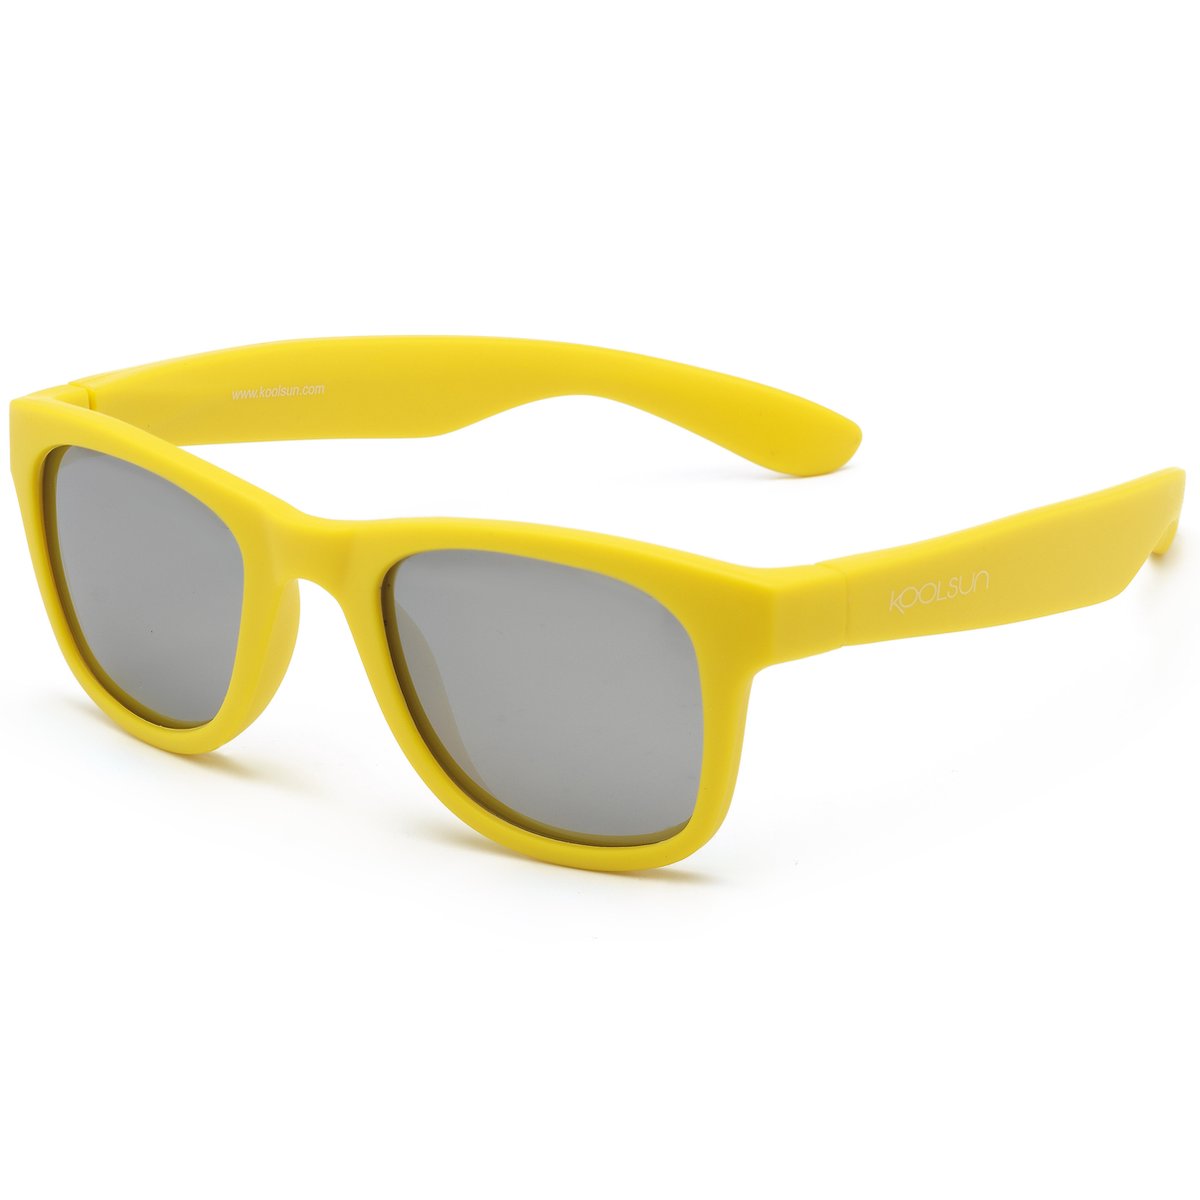 KOOLSUN - Wave - Kinder zonnebril - Empire Yellow - 1-5 jaar- UV400 - Categorie 3